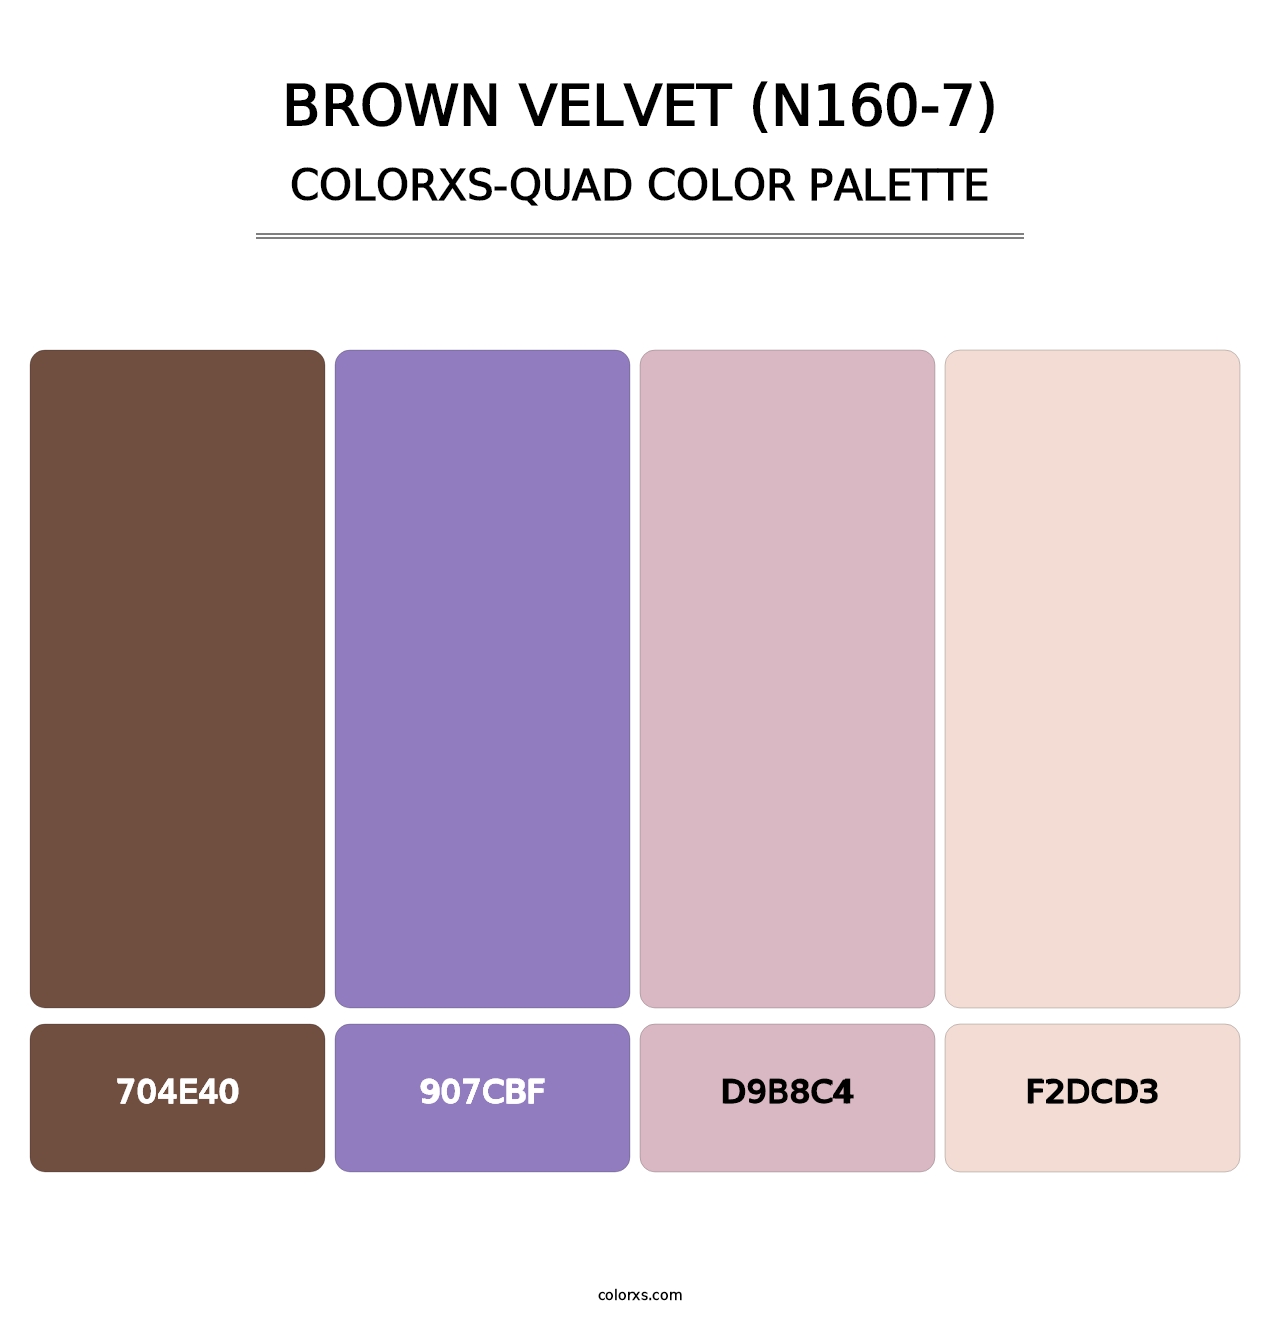 Brown Velvet (N160-7) - Colorxs Quad Palette